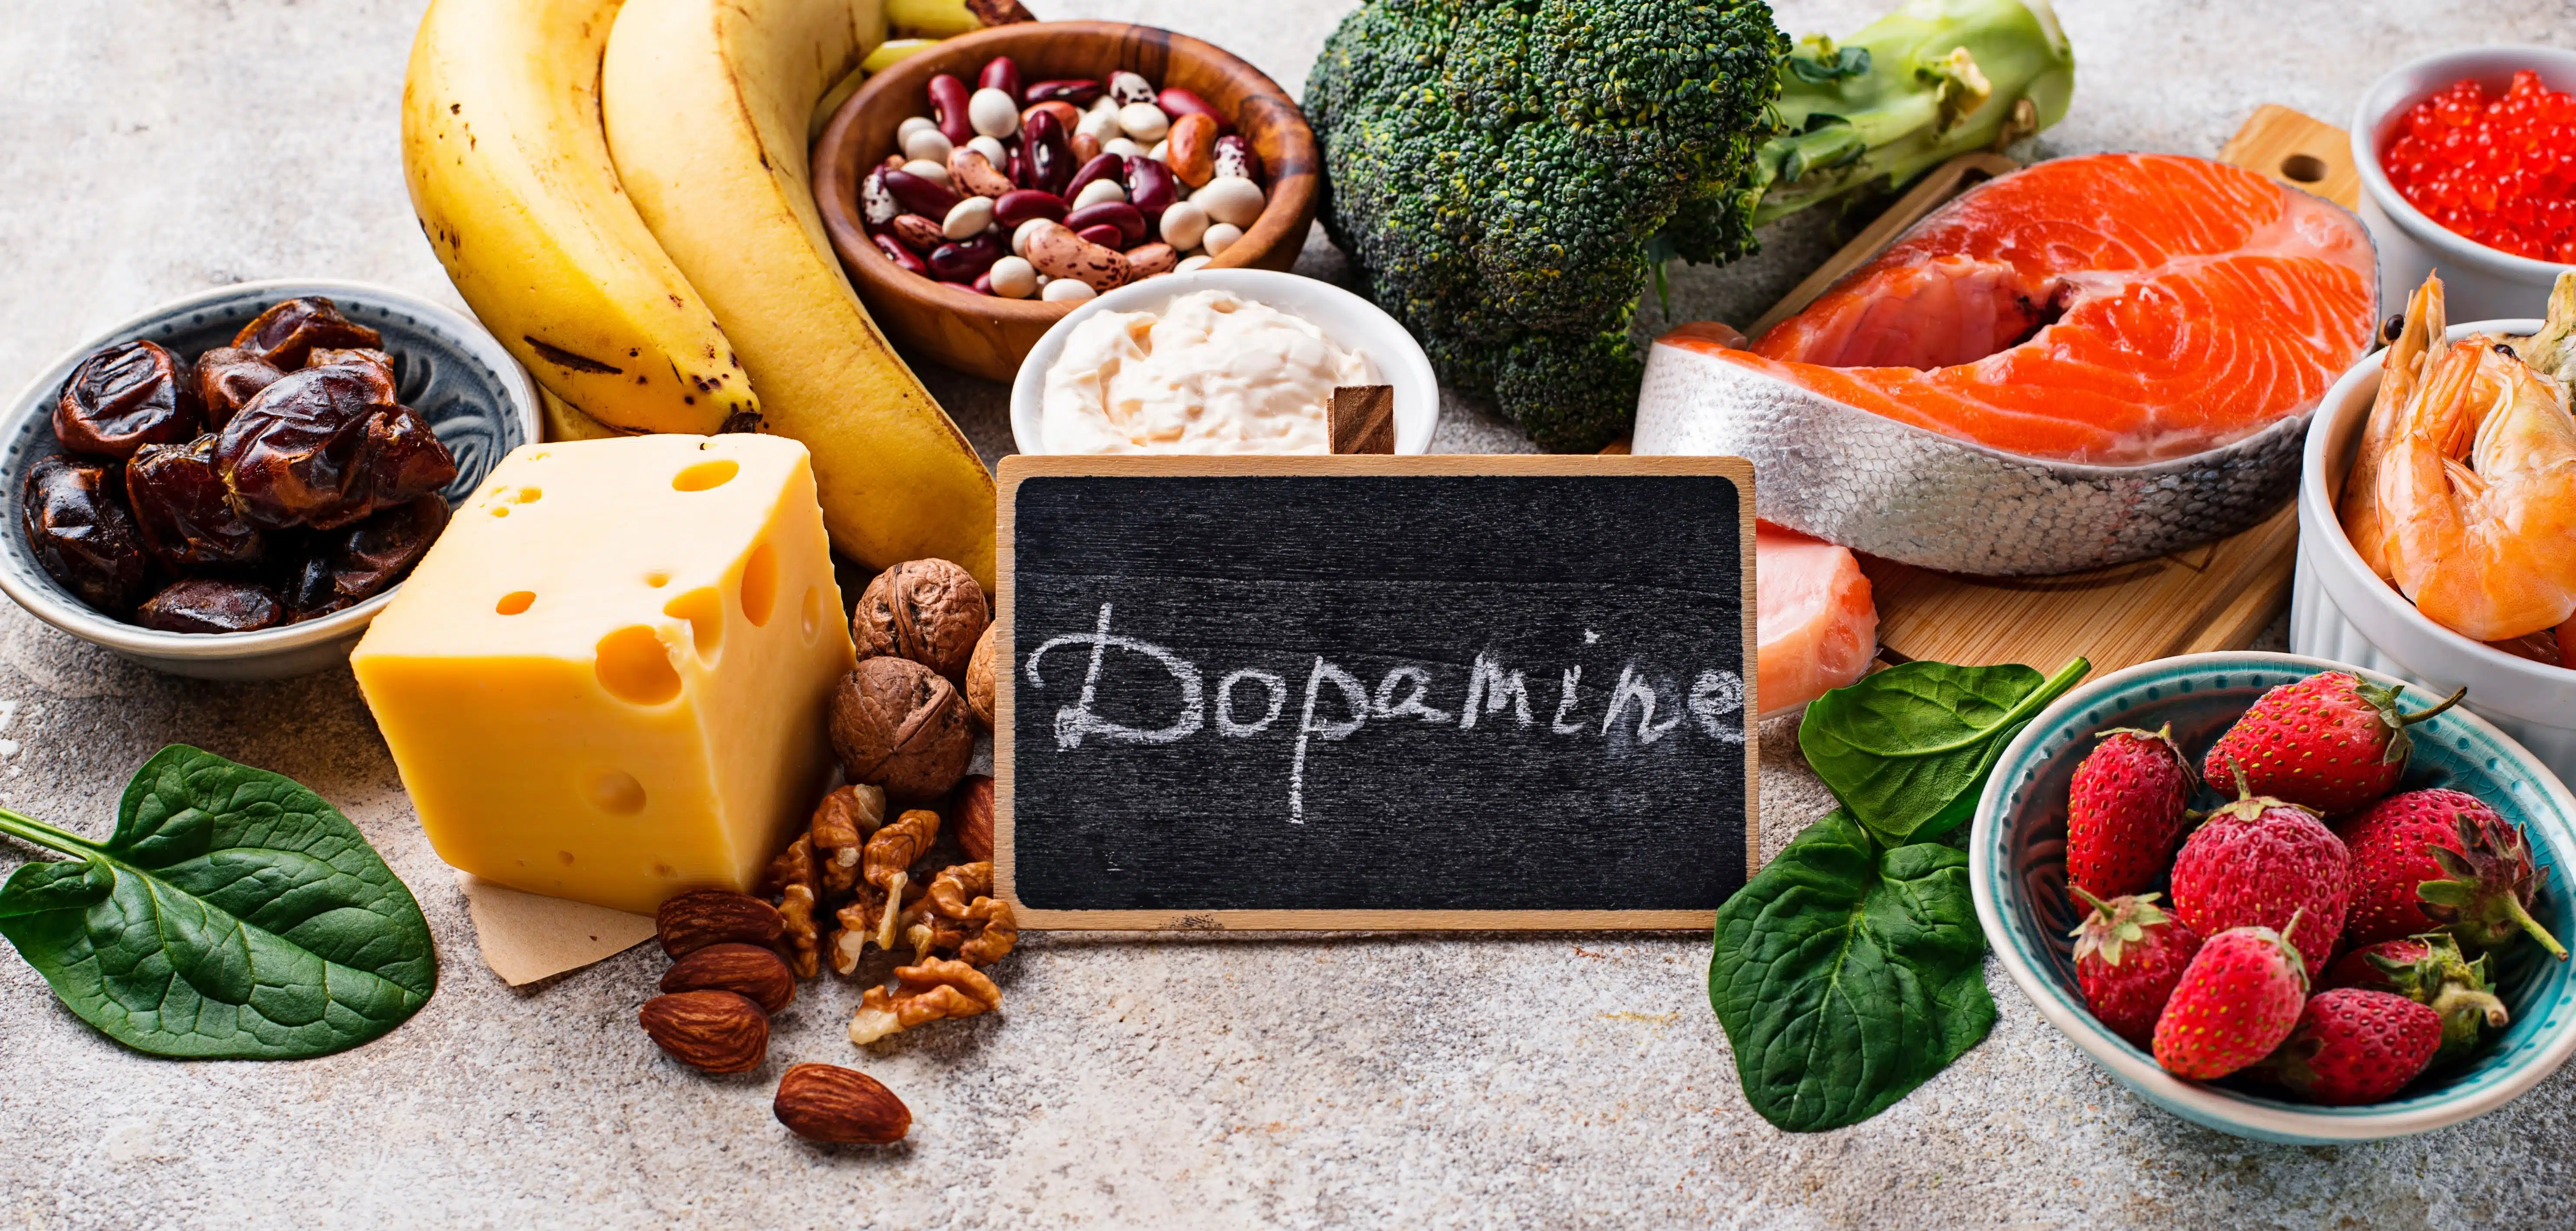 alimenti dopamina